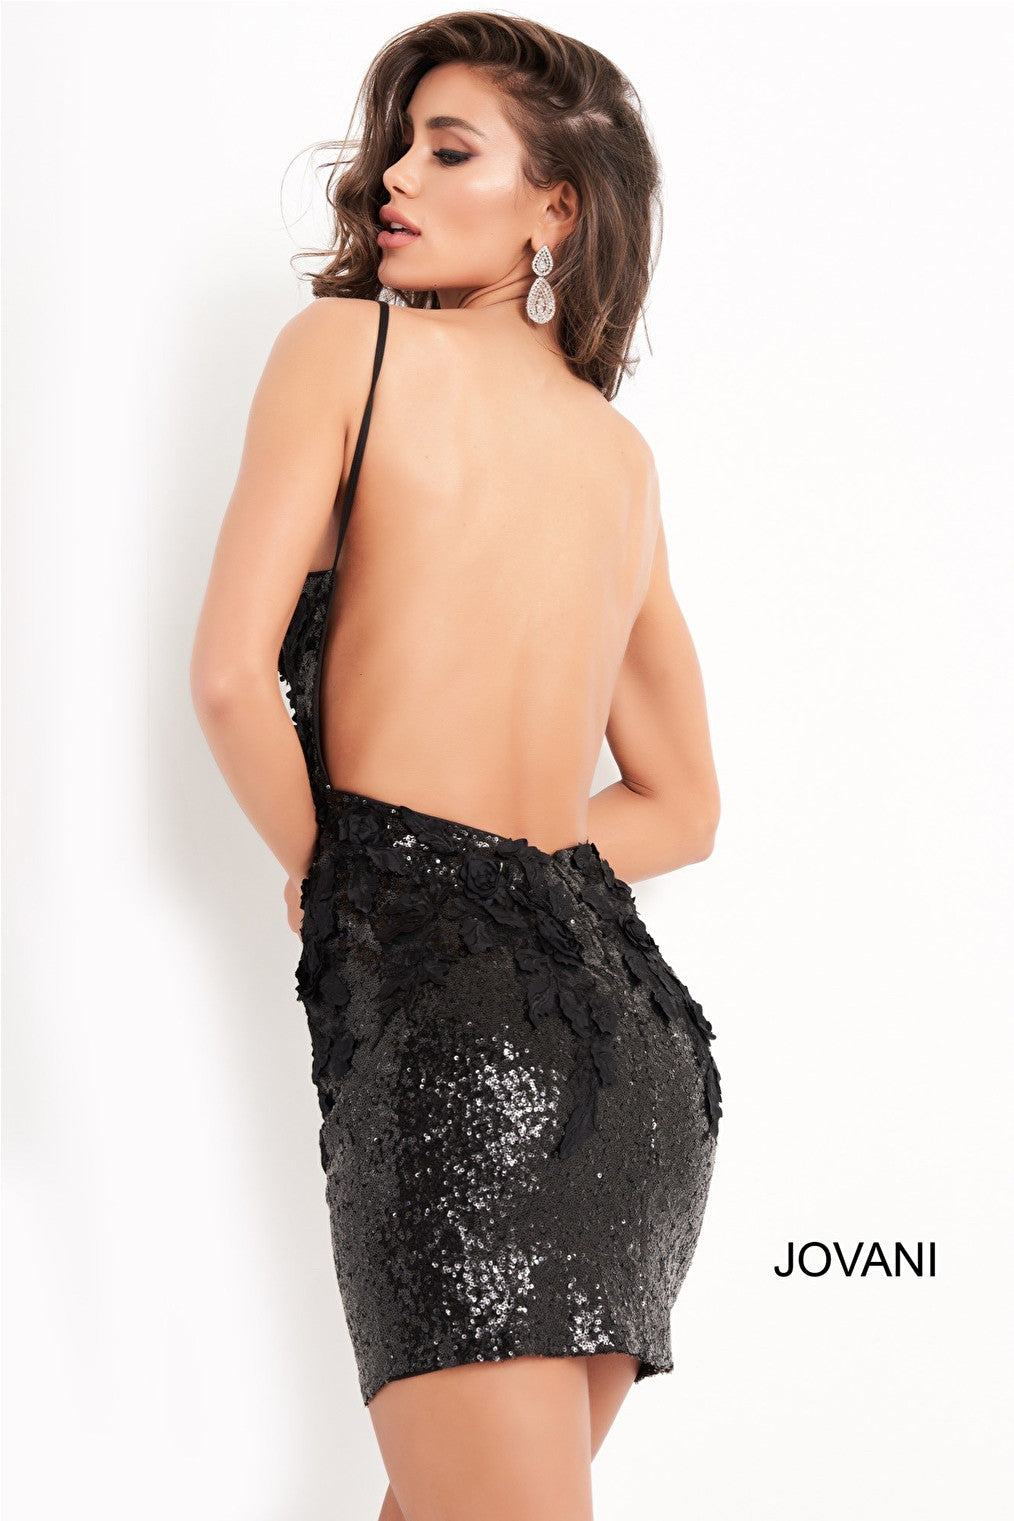 Backless black short dress Jovani 05282